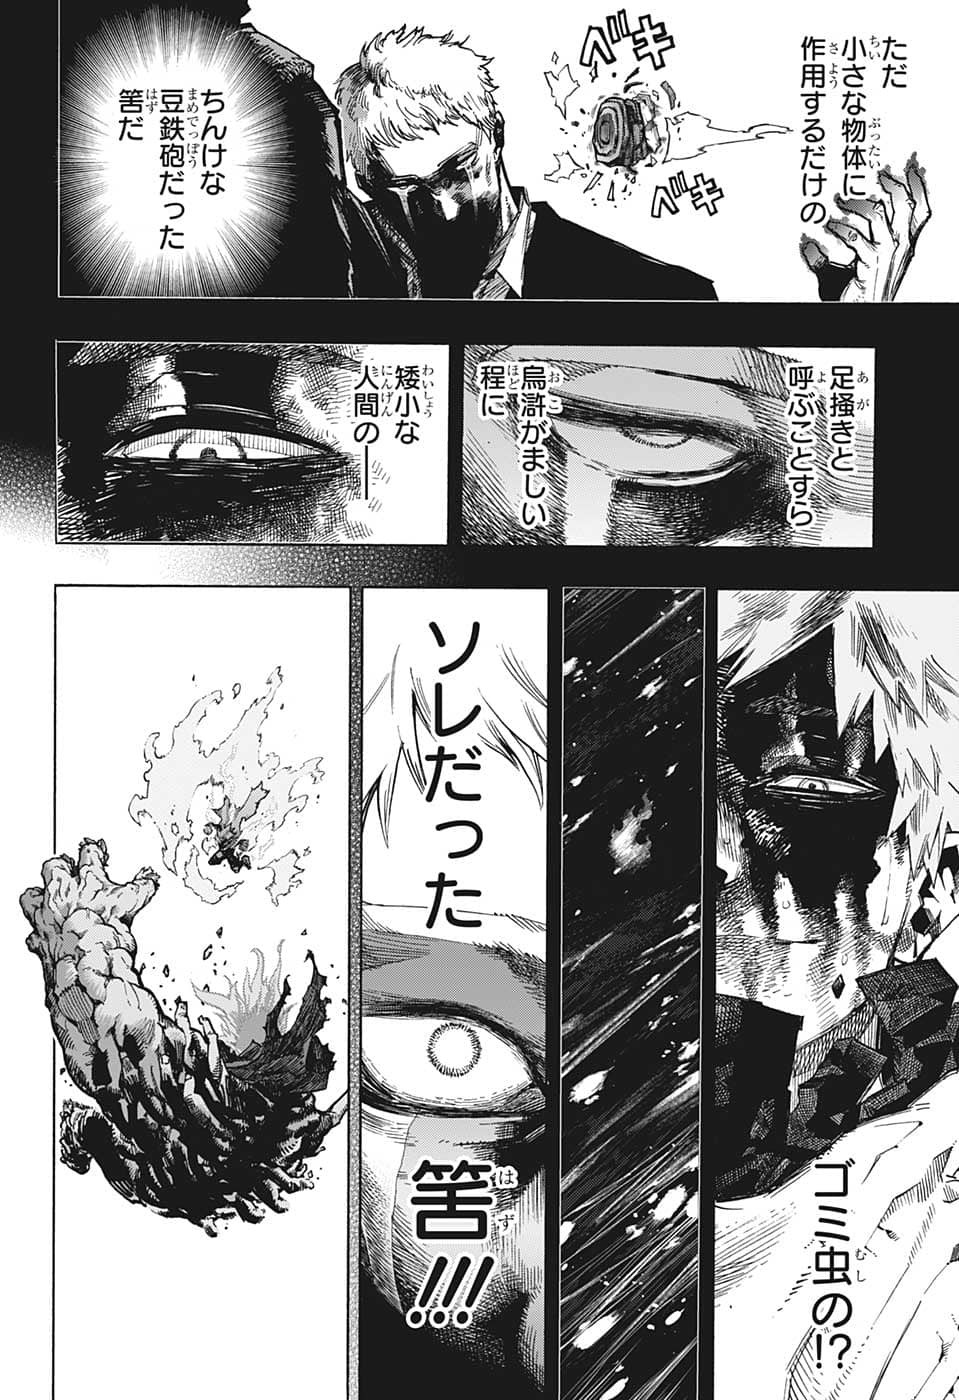 Boku no Hero Academia - Chapter 369 - Page 2